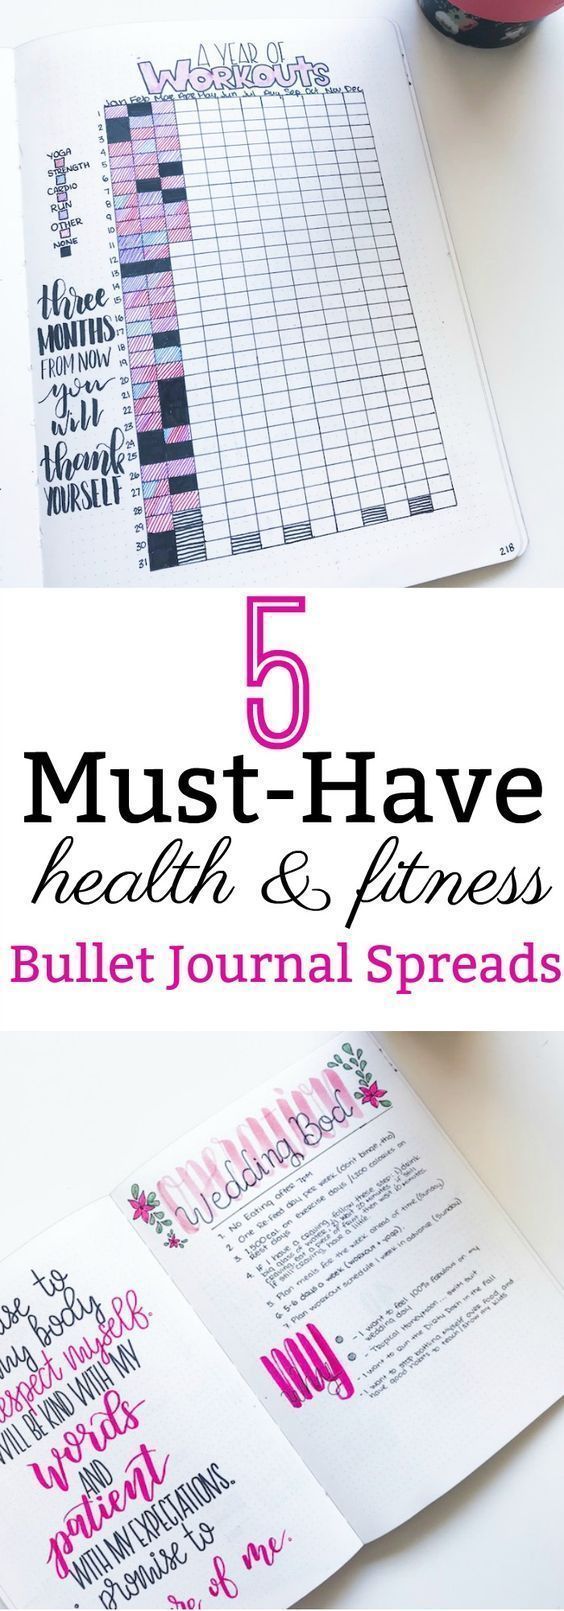 12 fitness Journal spreads ideas